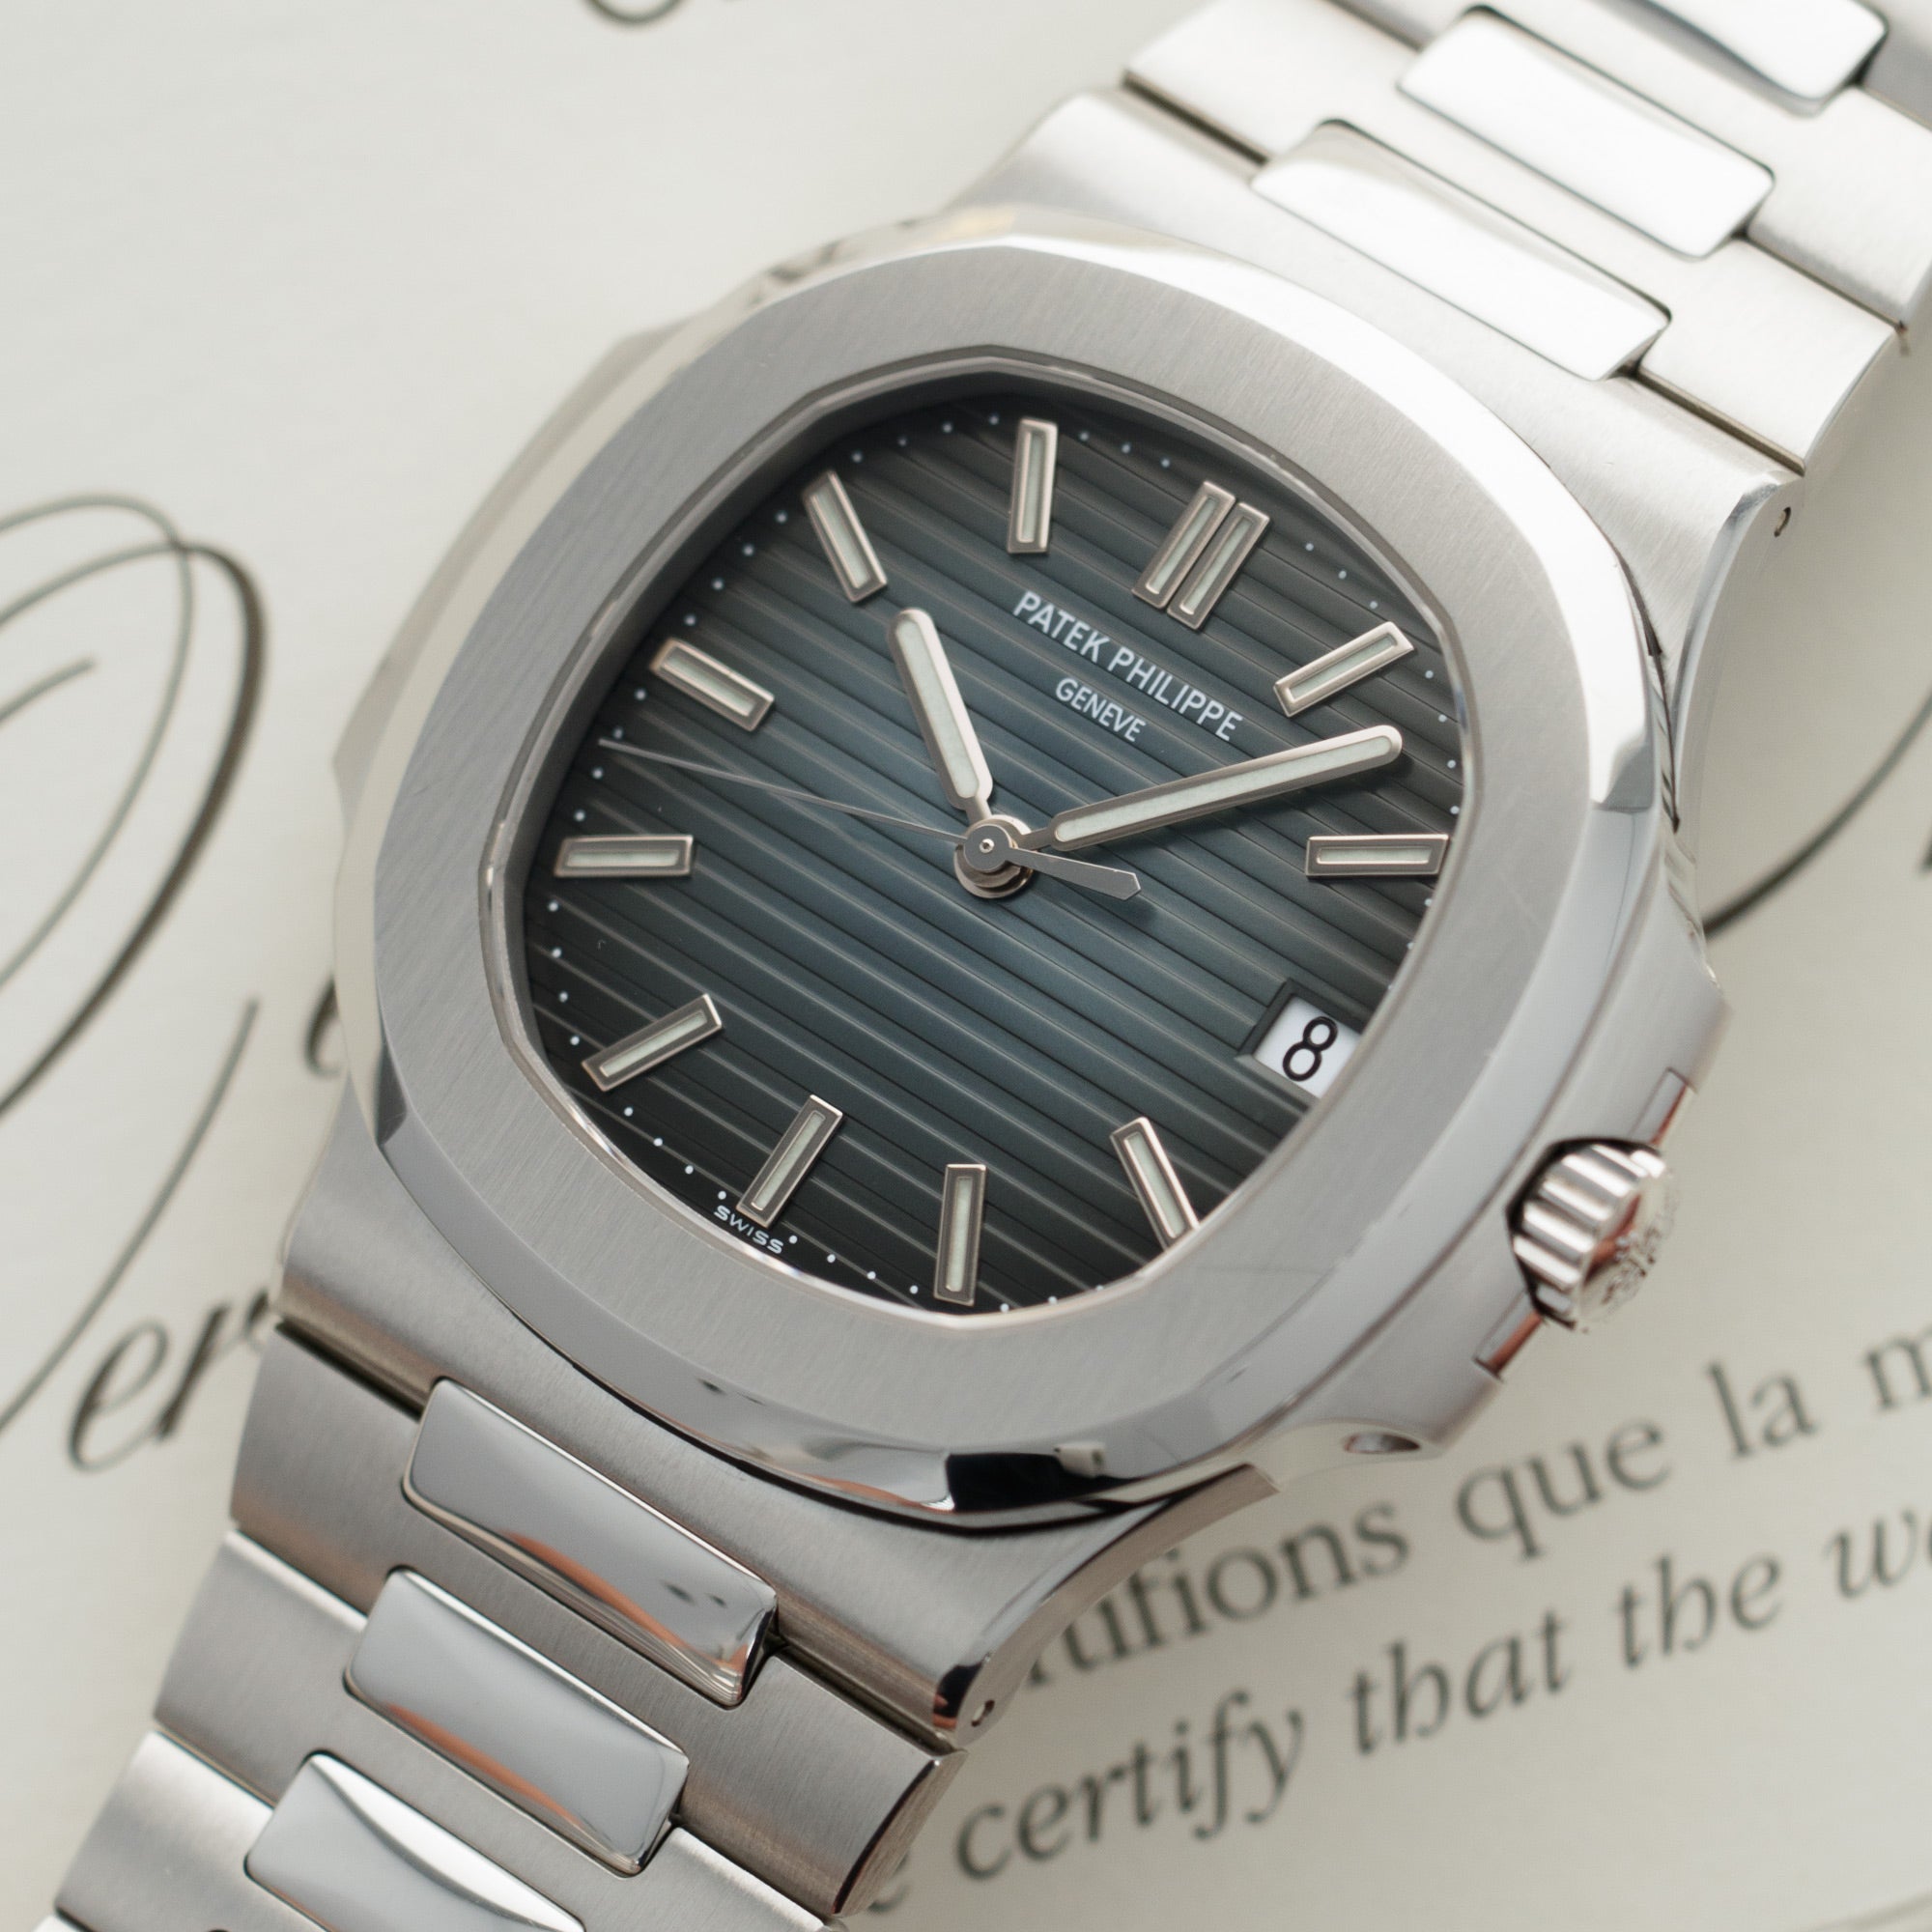 Patek Philippe - Patek Philippe Steel Nautilus Ref. 5711 with Original Box and Warranty - The Keystone Watches